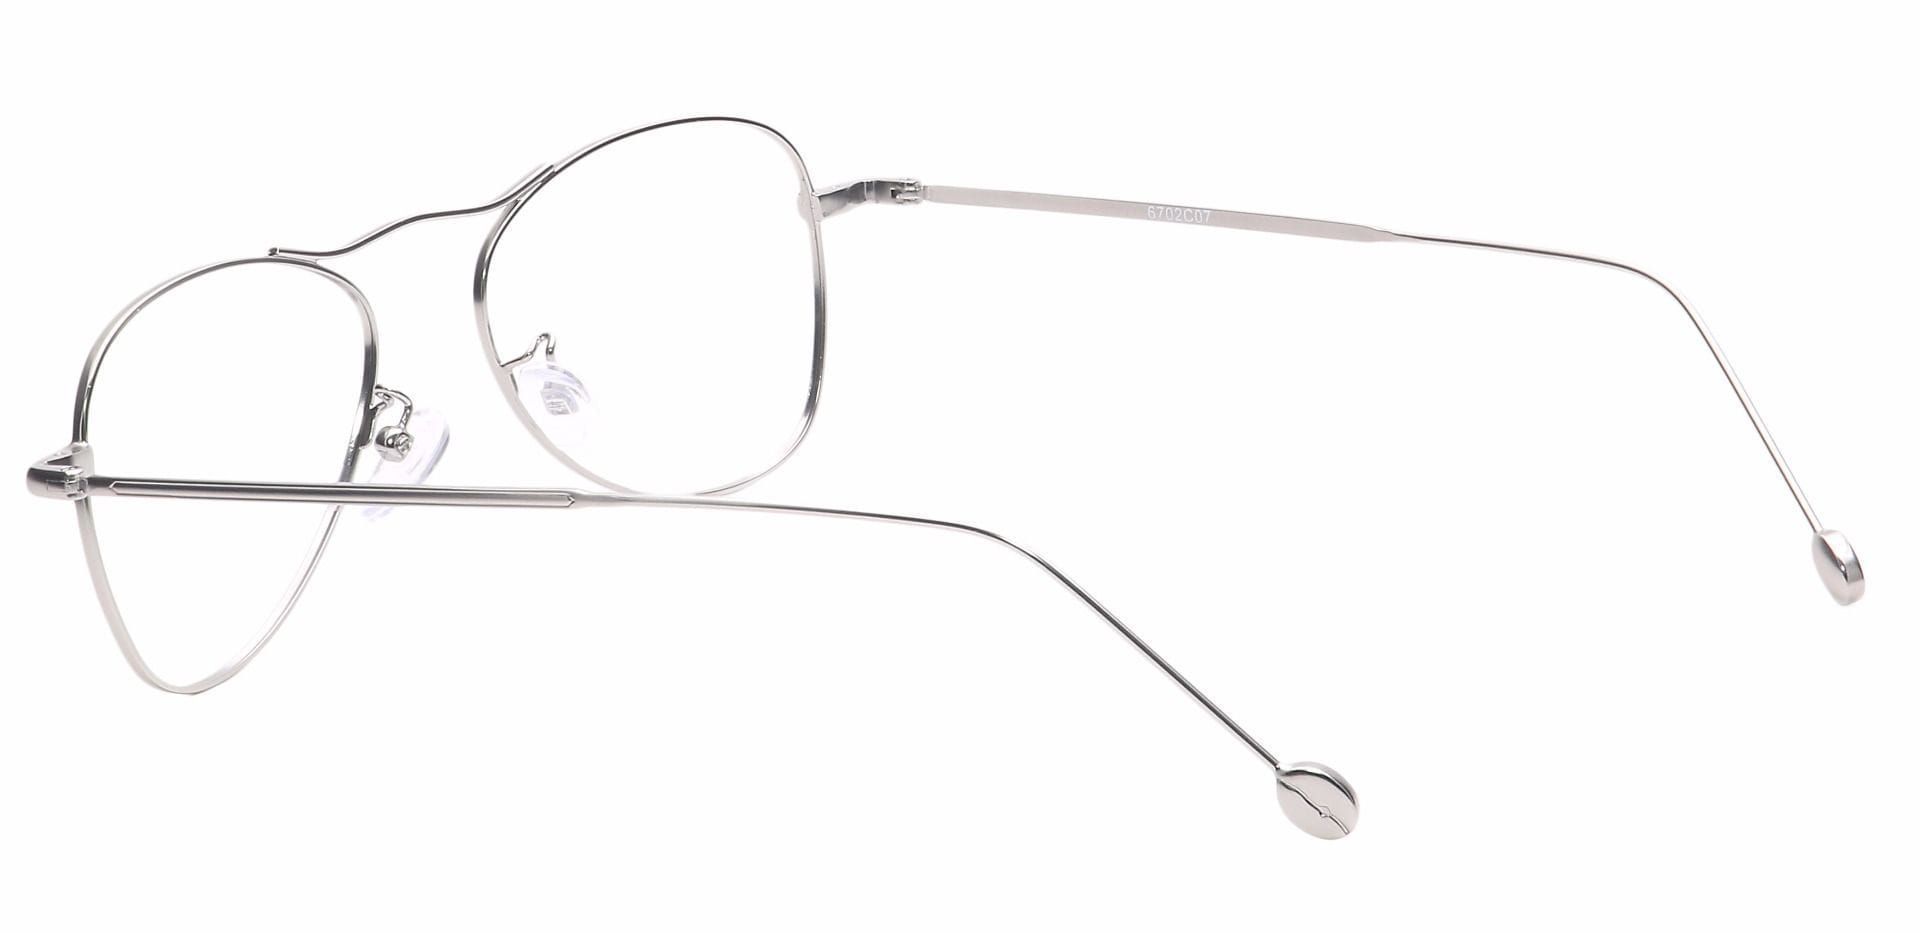 Brio Aviator Blue Light Blocking Glasses - Silver